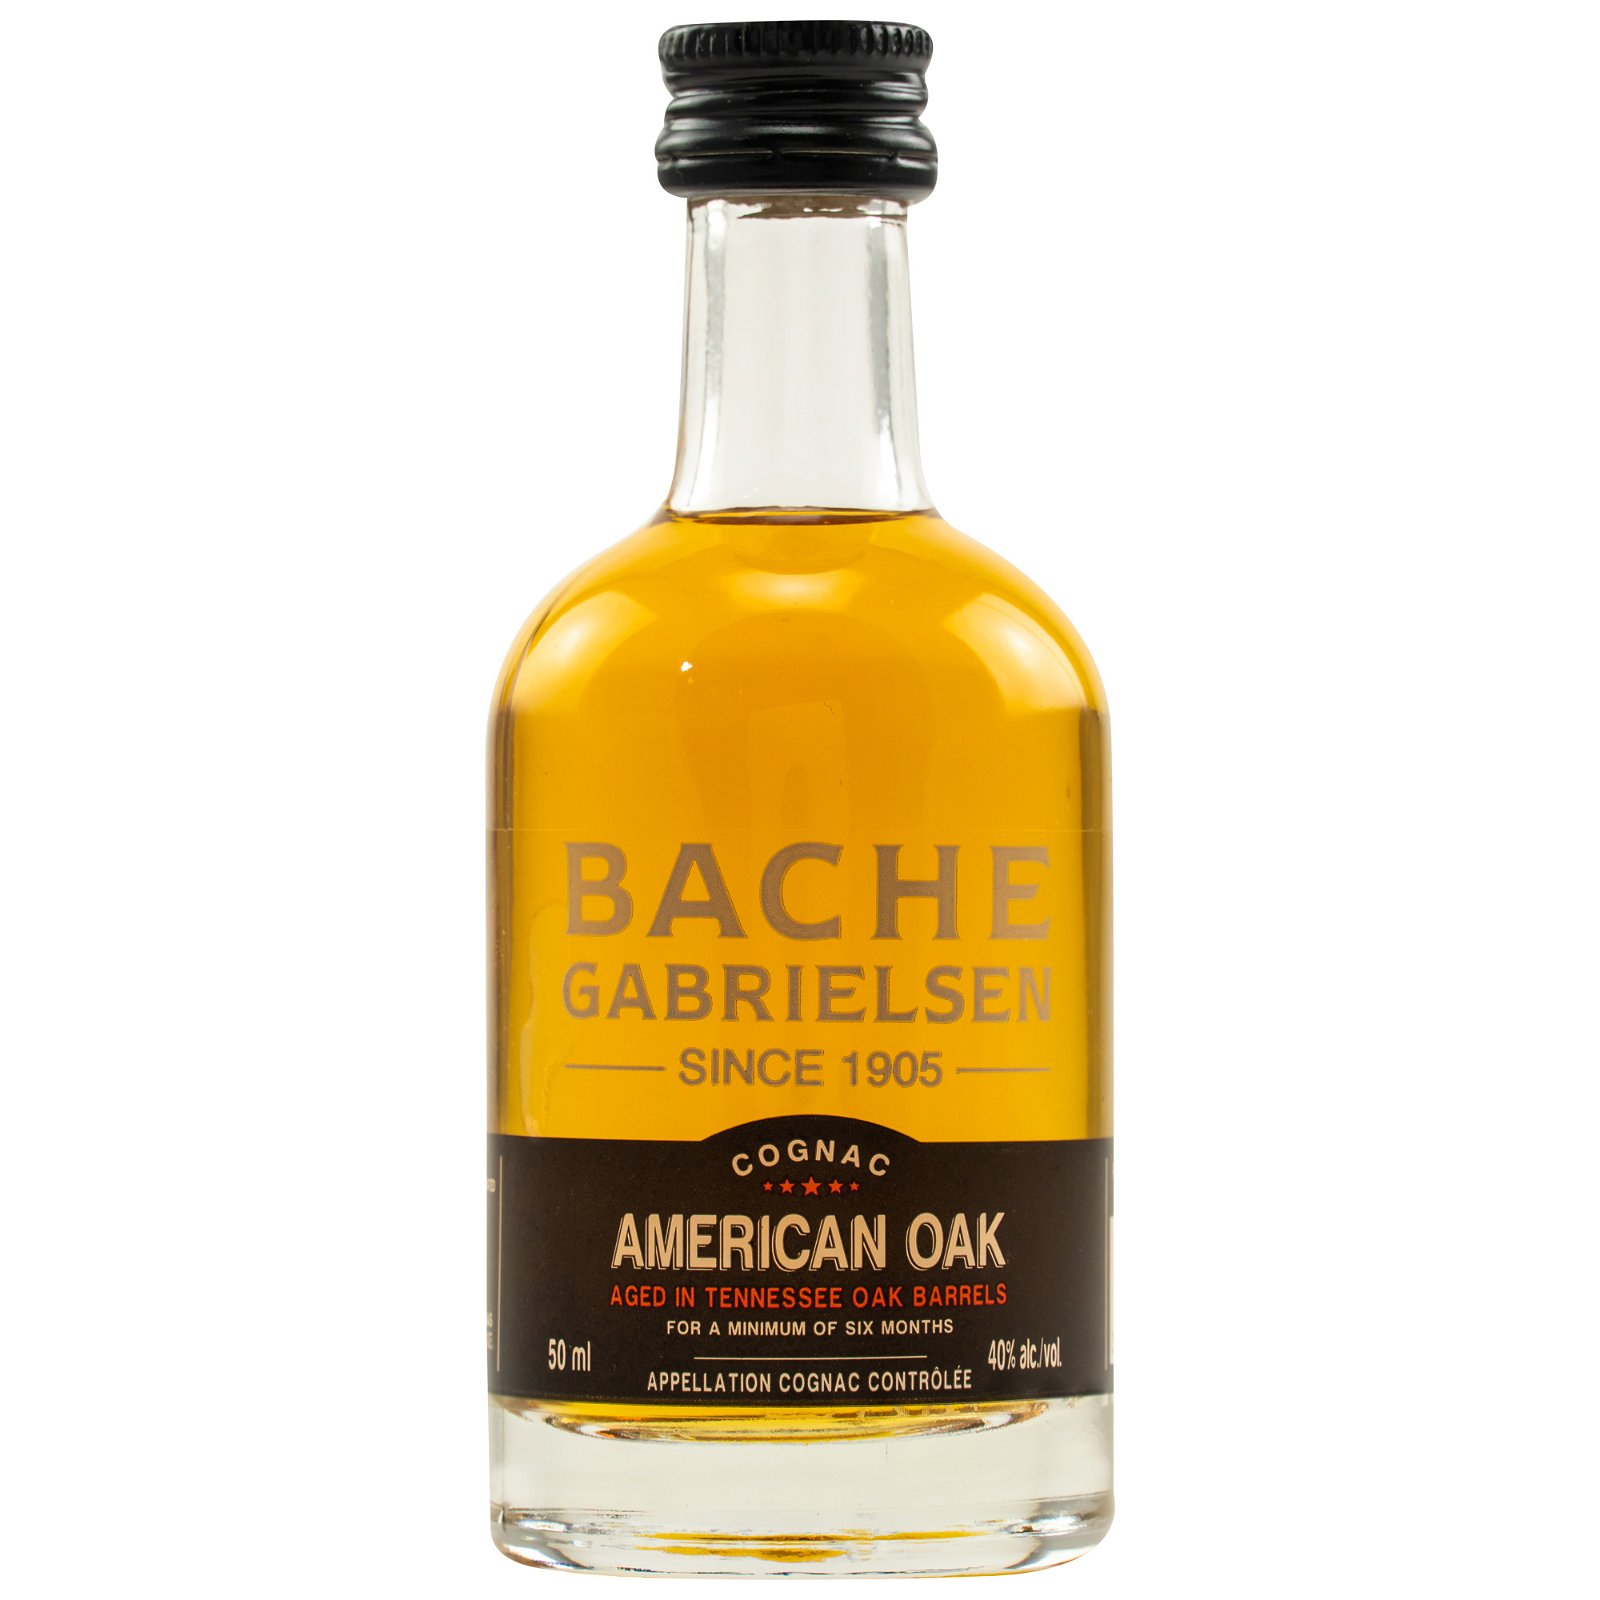 Bache-Gabrielsen American Oak (Miniatur)